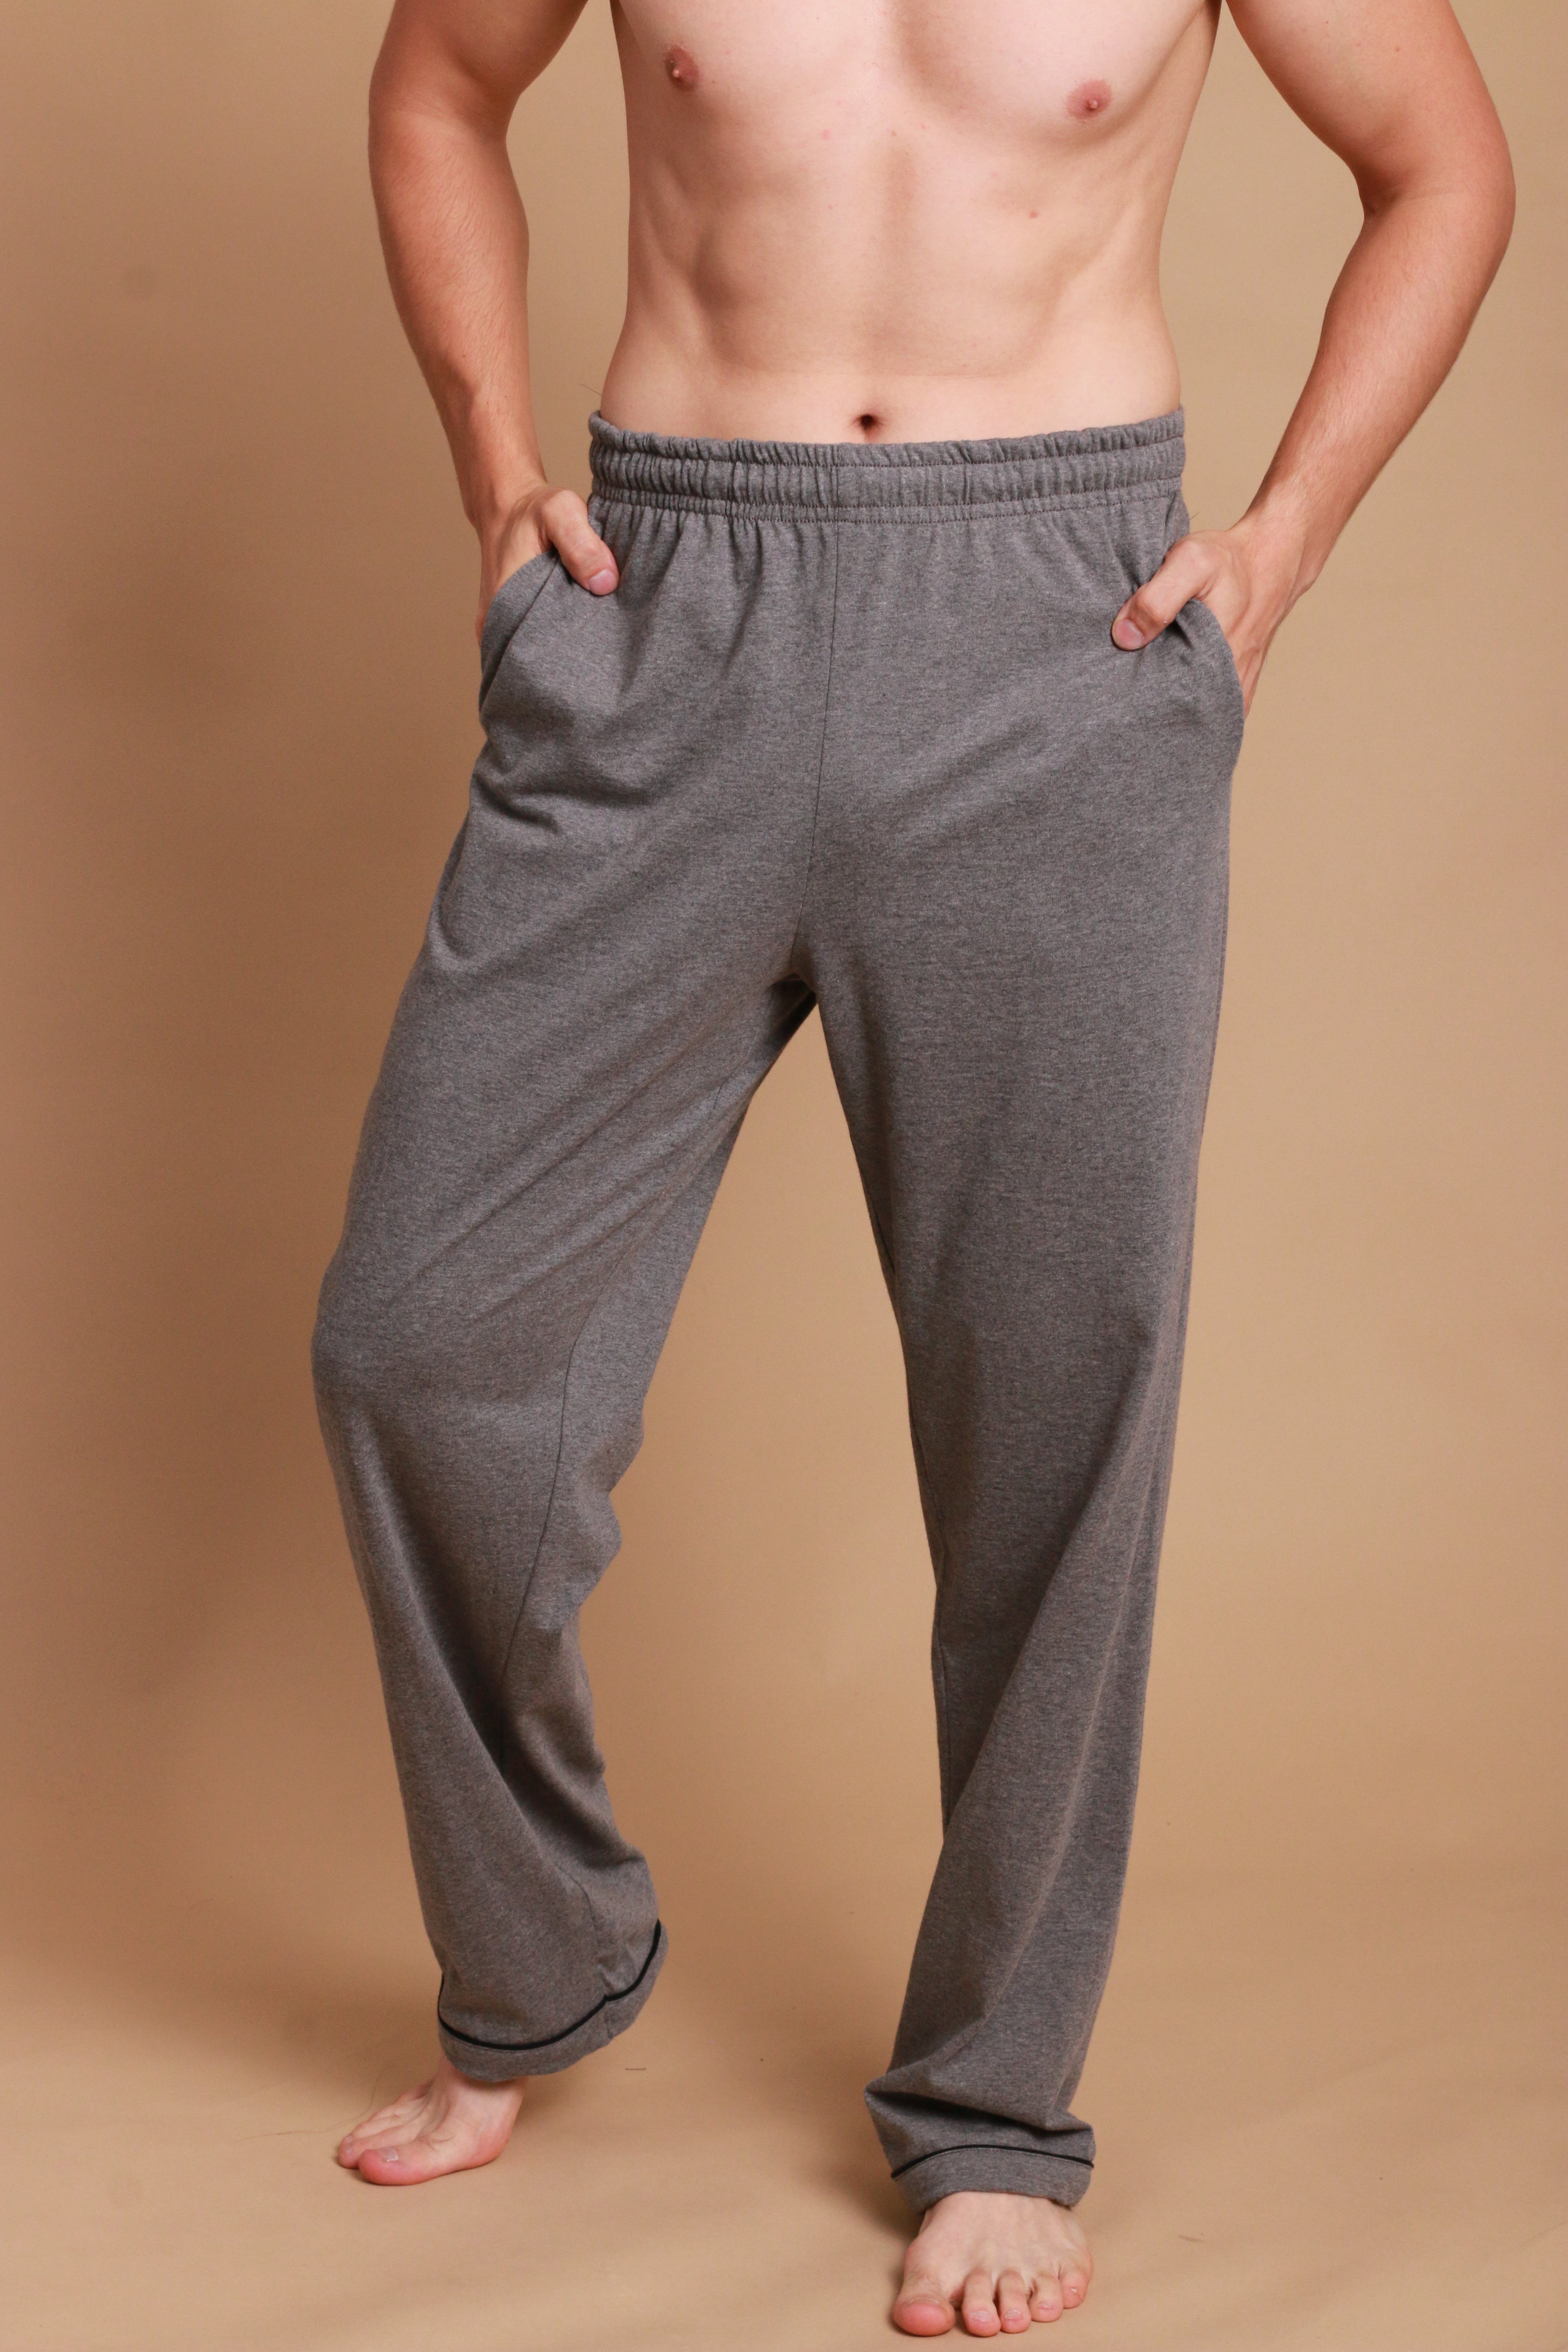 Mens Sleepwear Sleep Cotton Pajama Pants Lounge Bottoms Trousers Nightwear  Hot | eBay